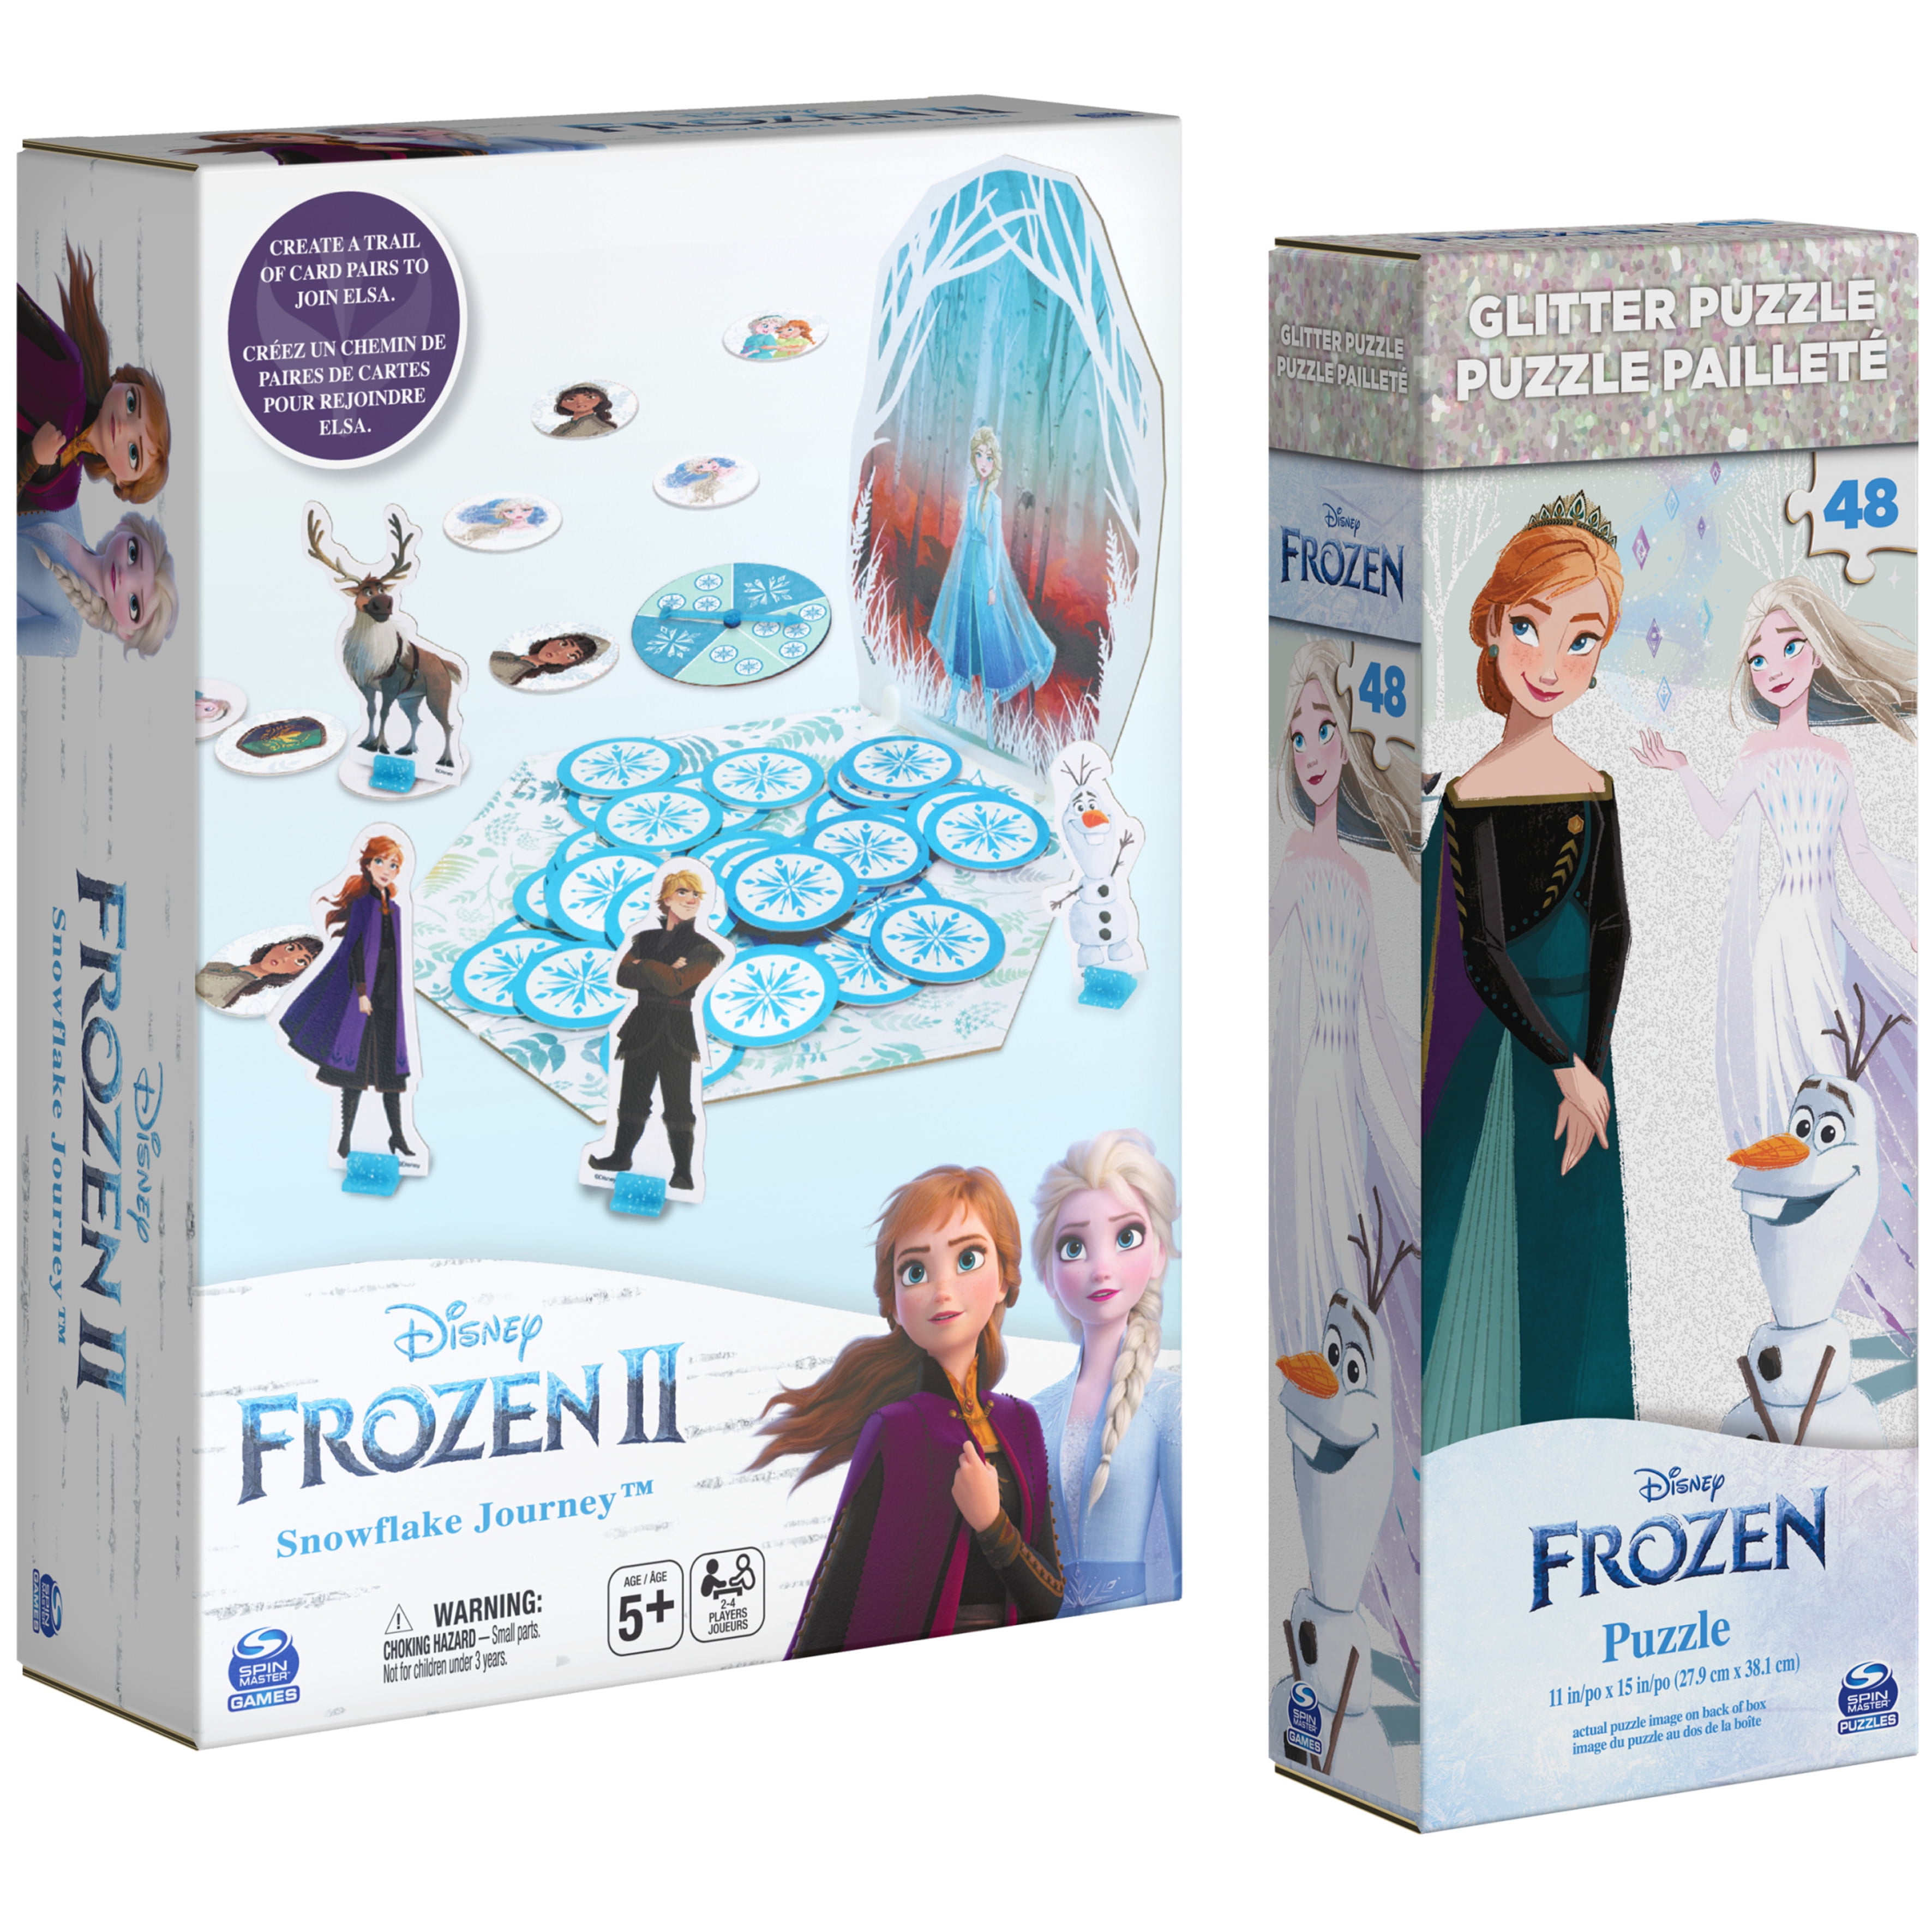 Disney's Frozen glitter puzzle. Mod podge puzzle saver and glitter.